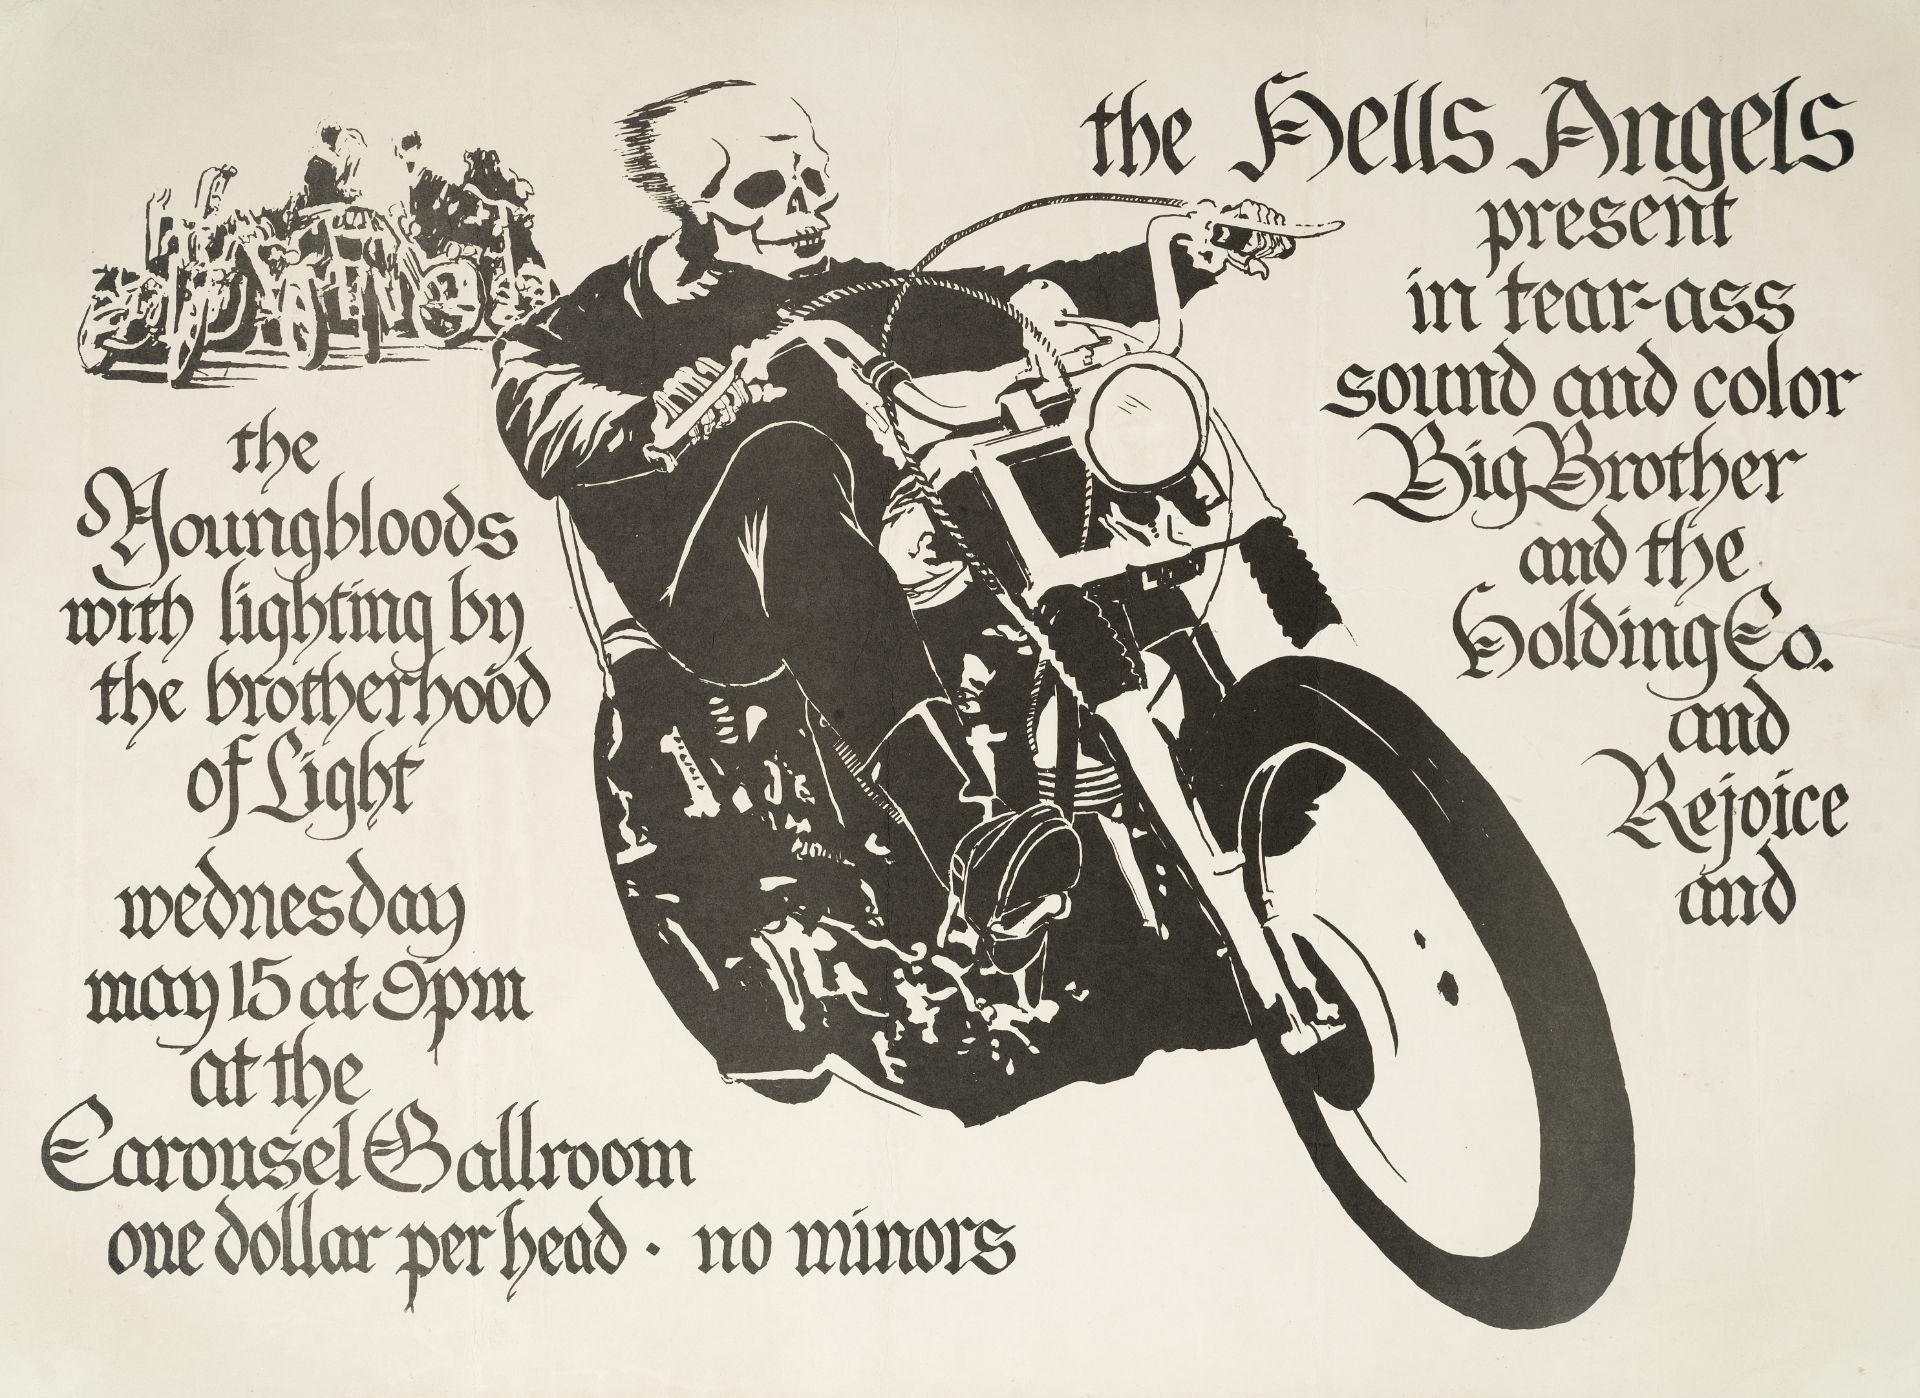 Hells Angels: A CAROUSEL BALLROOM POSTER, 15th May 1968,